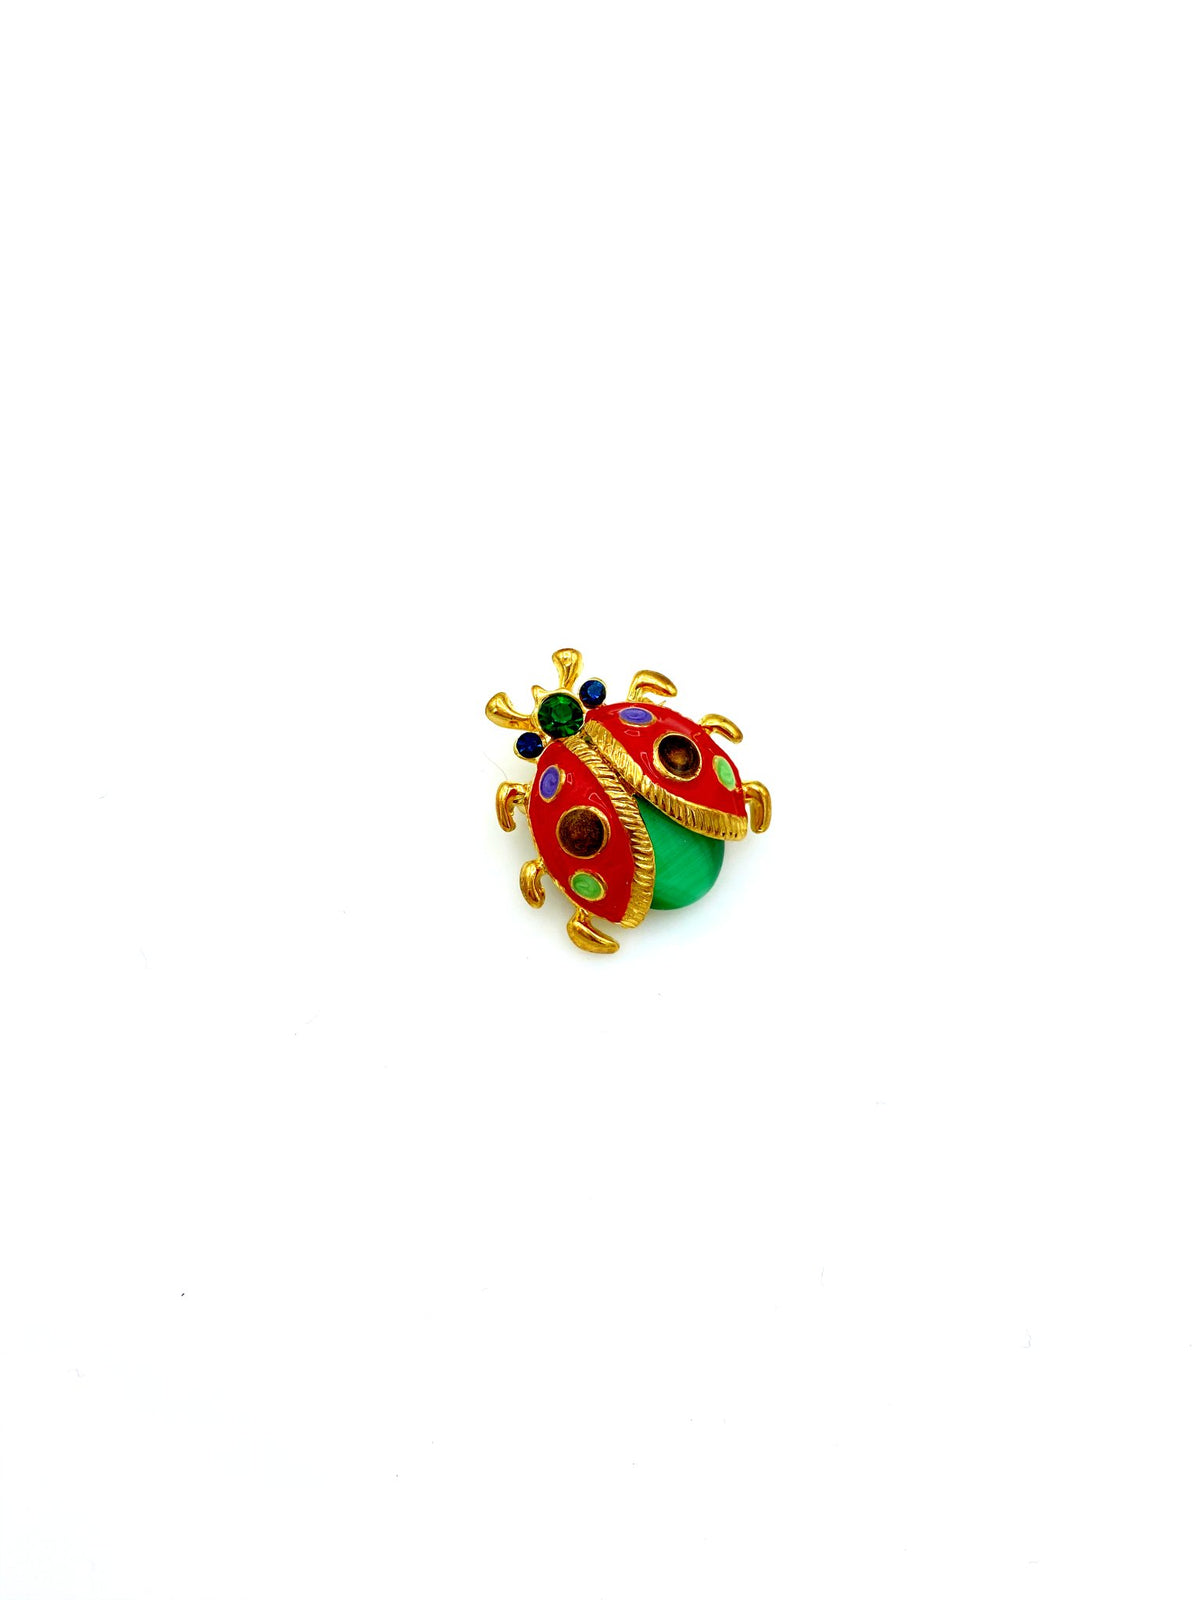 Colorful Ladybug Enamel Vintage Brooch - 24 Wishes Vintage Jewelry